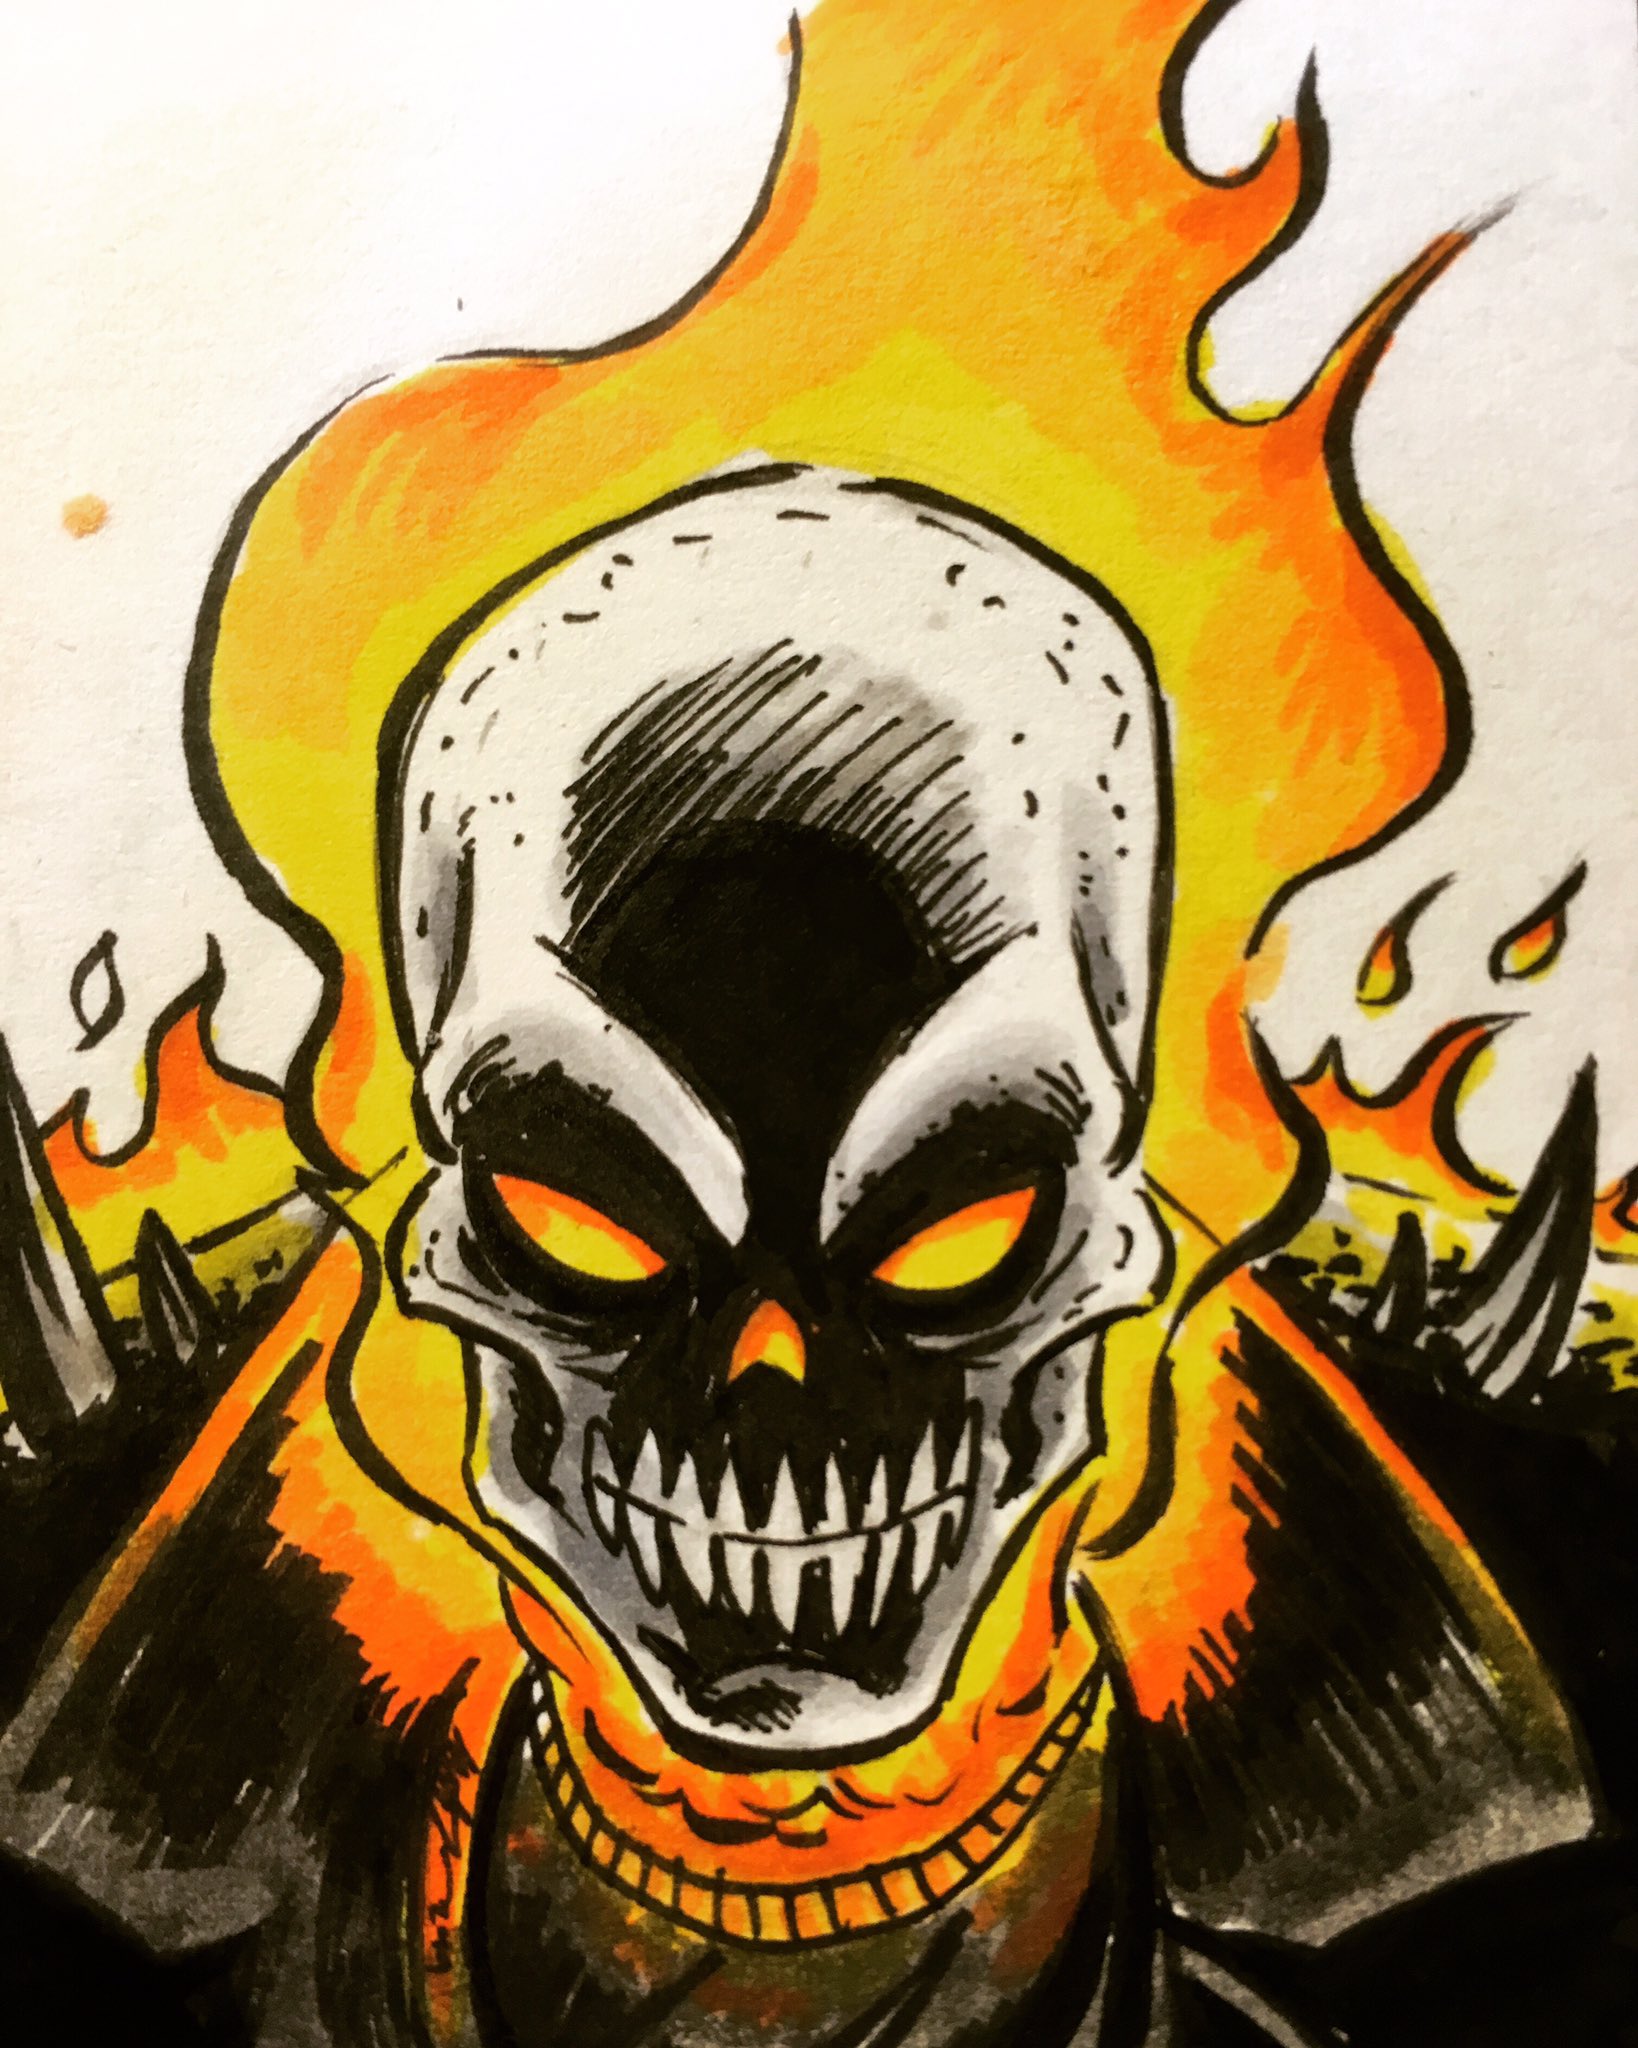 Ghost Rider drawing. | Marvel Amino